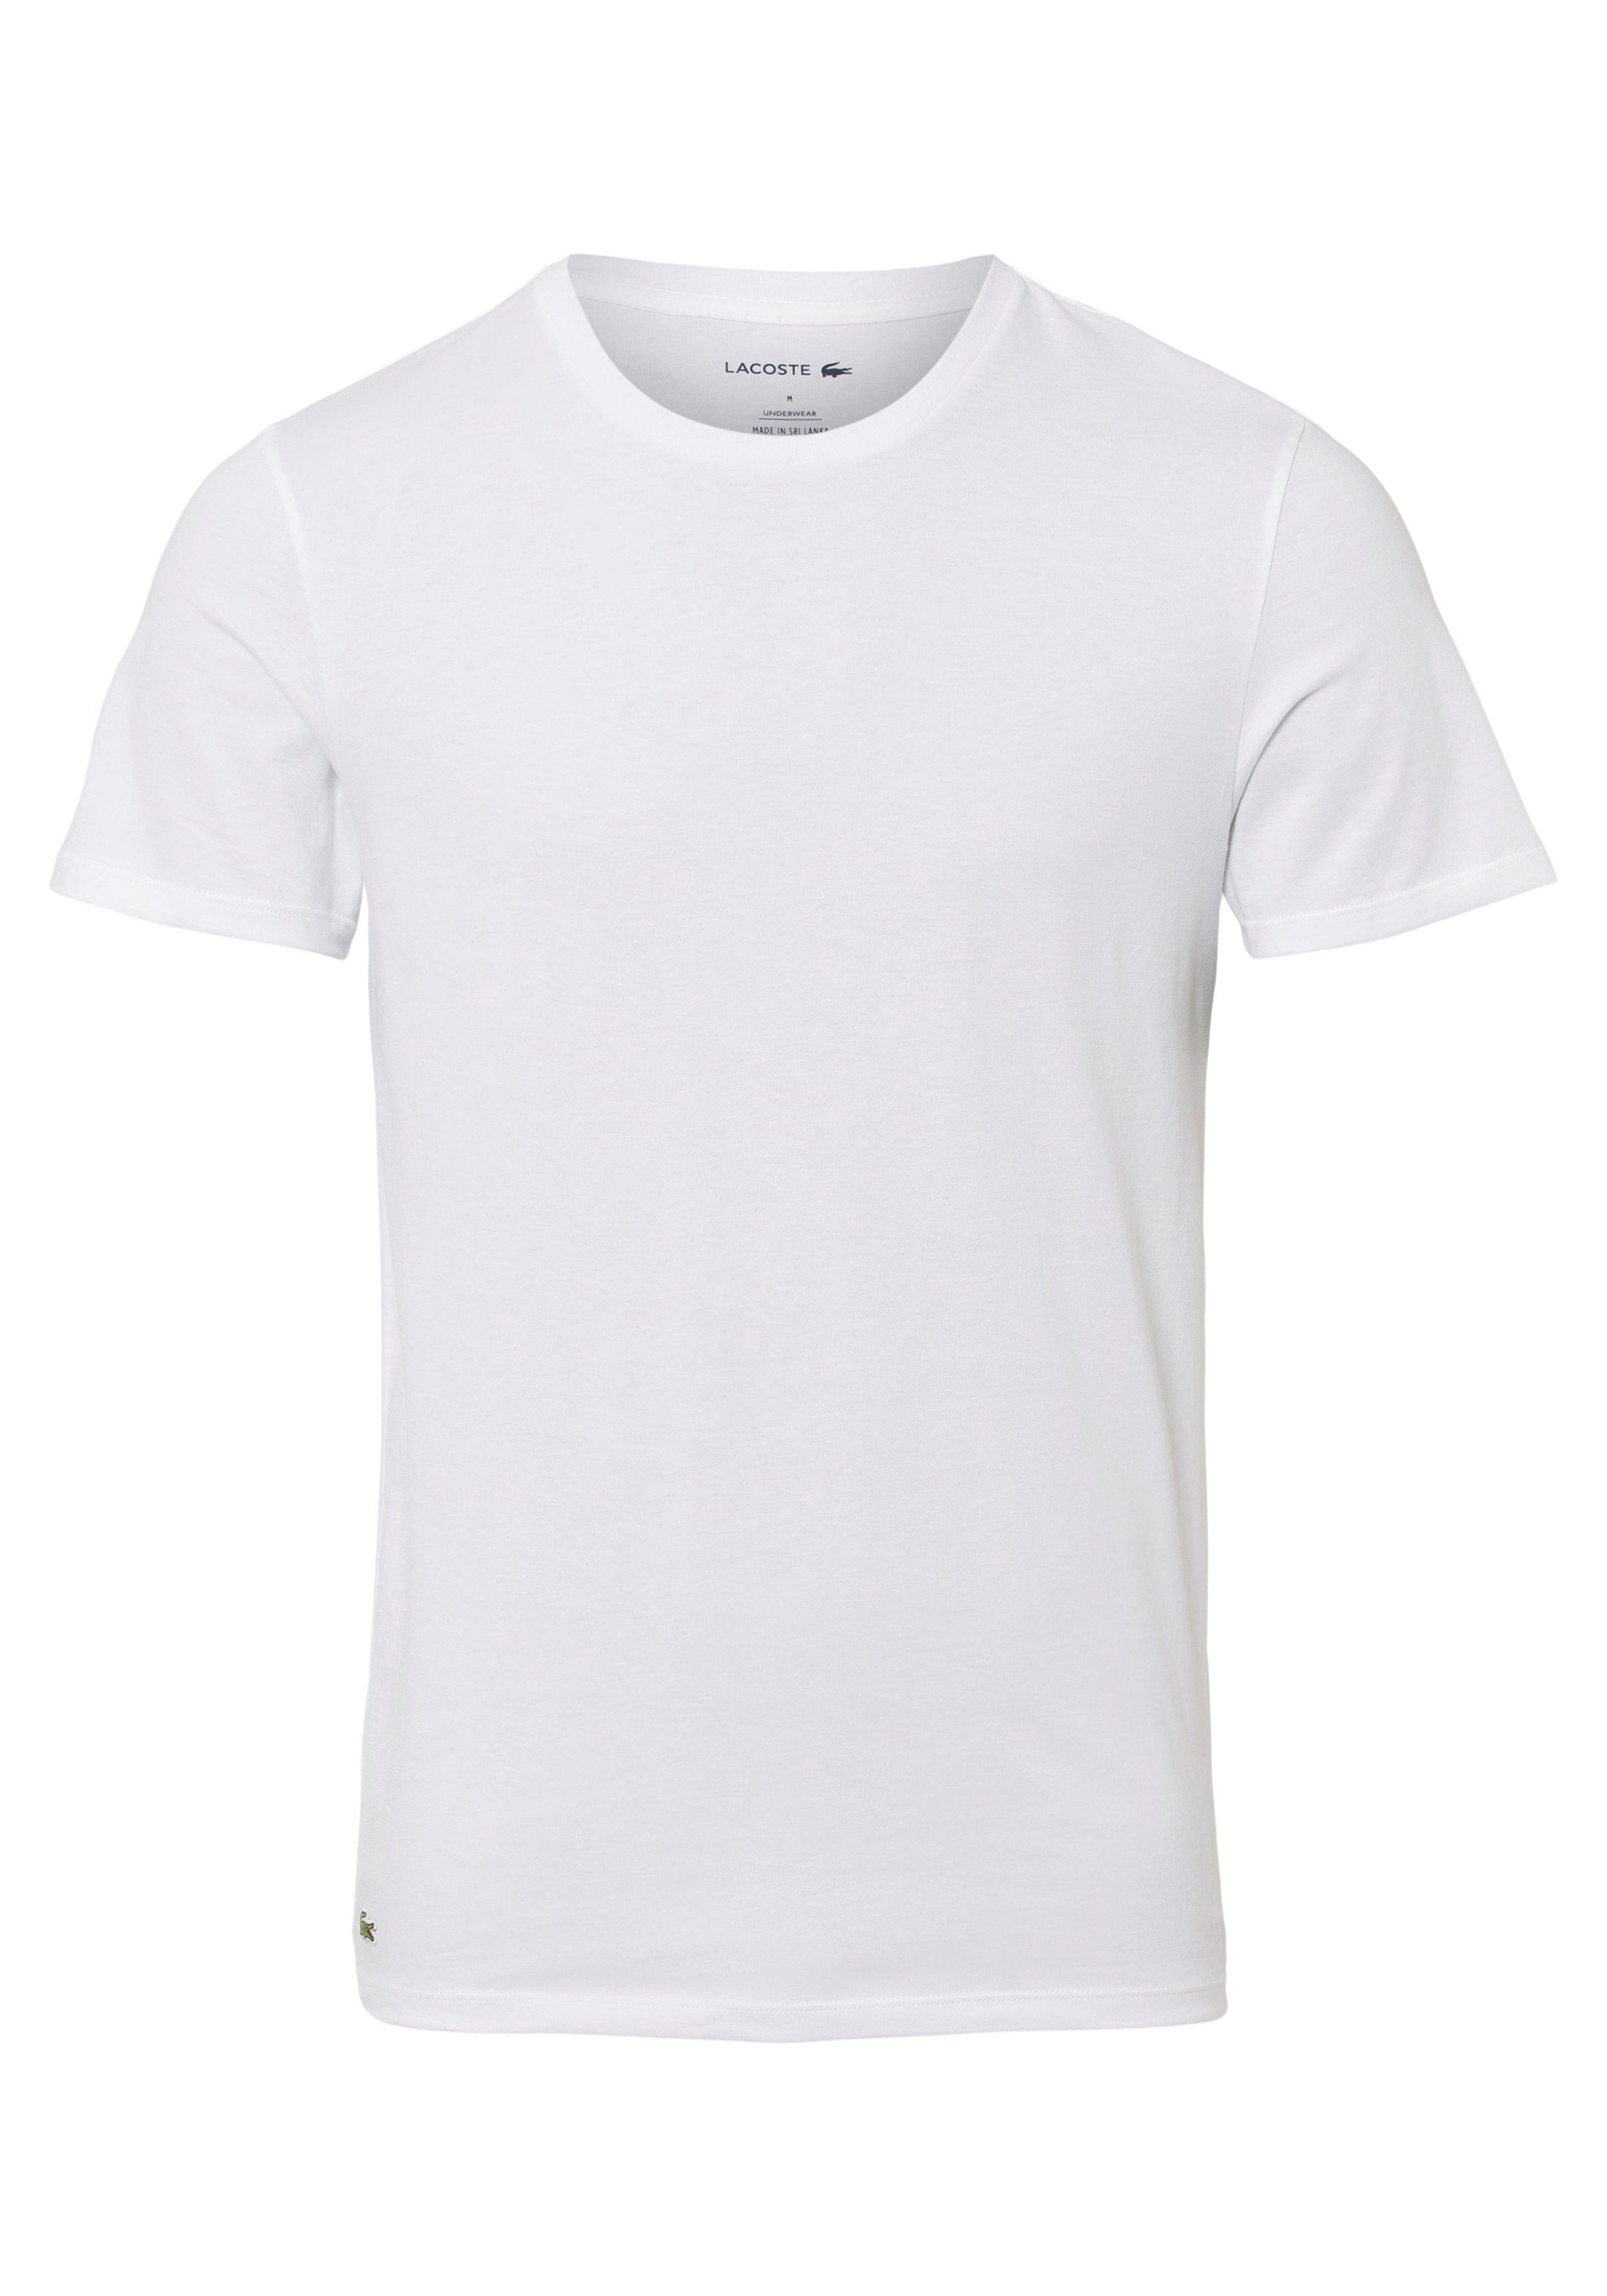 Lacoste T-Shirt (3er-Pack) Atmungsaktives Baumwollmaterial für angenehmes Hautgefühl weiß | Unterhemden